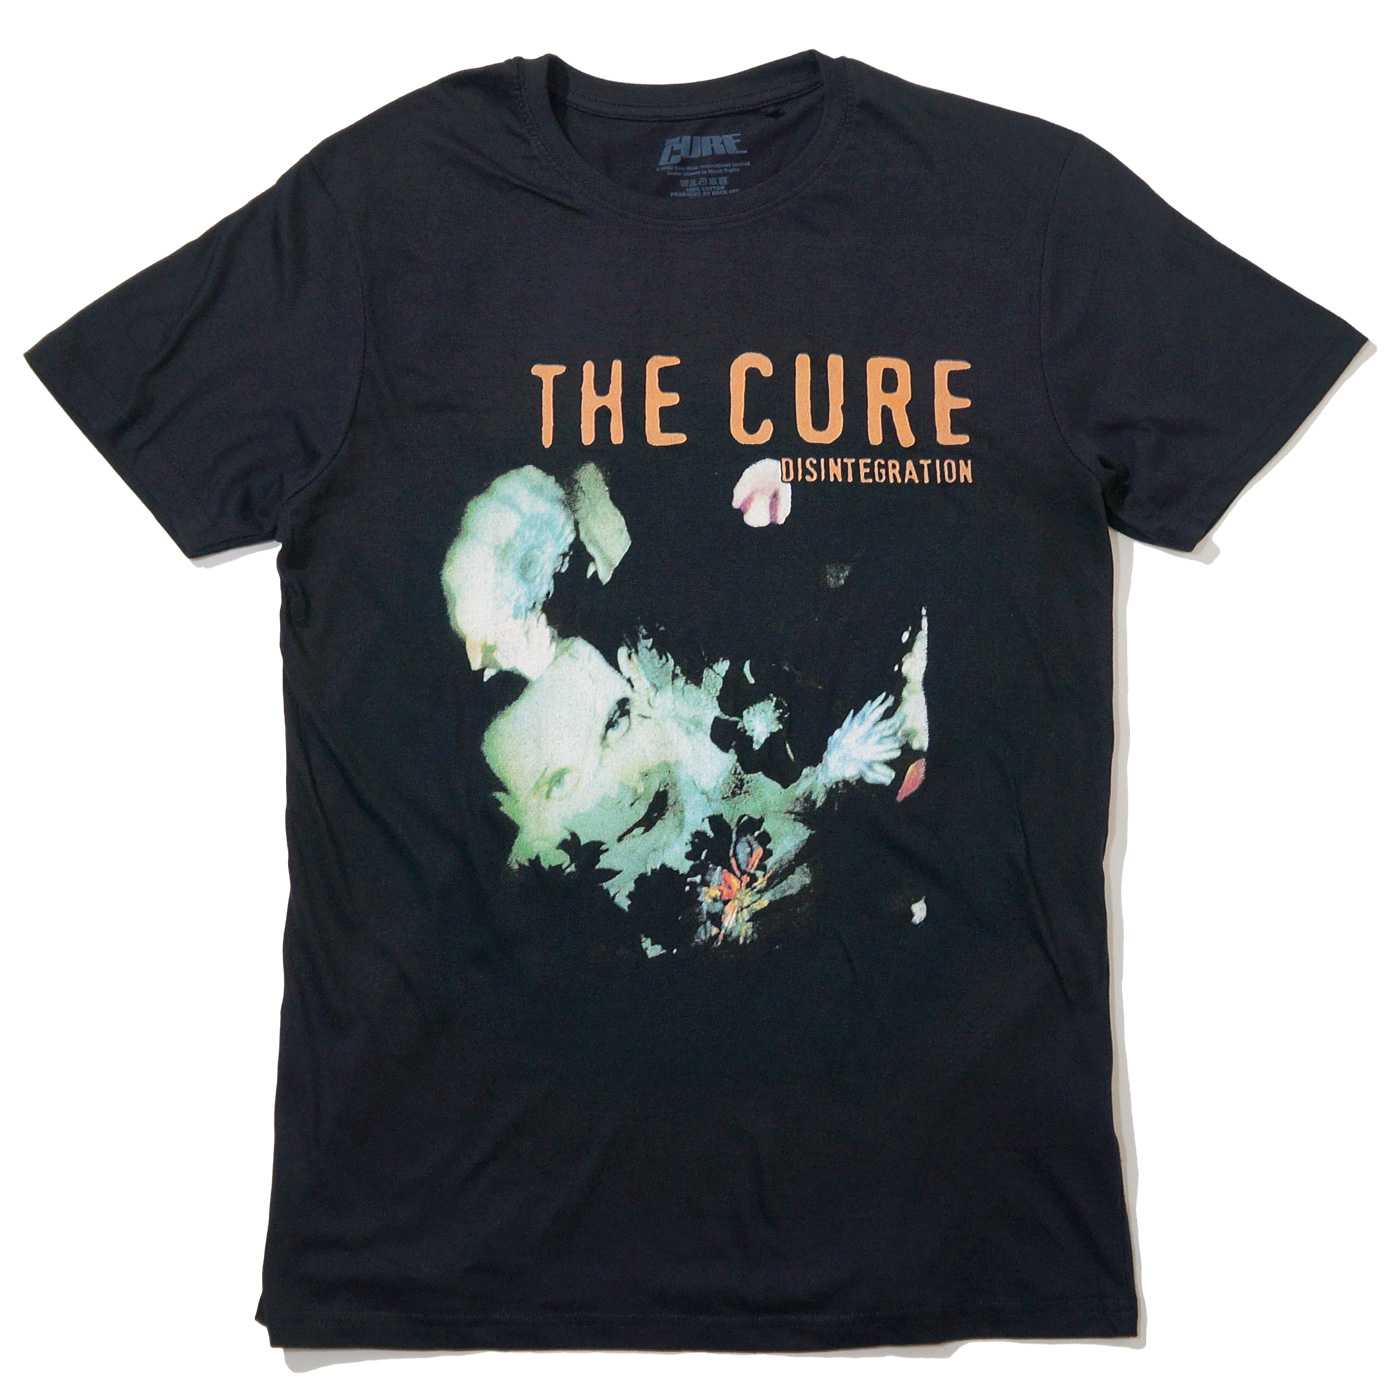 The CURE Tシャツ Disintegration